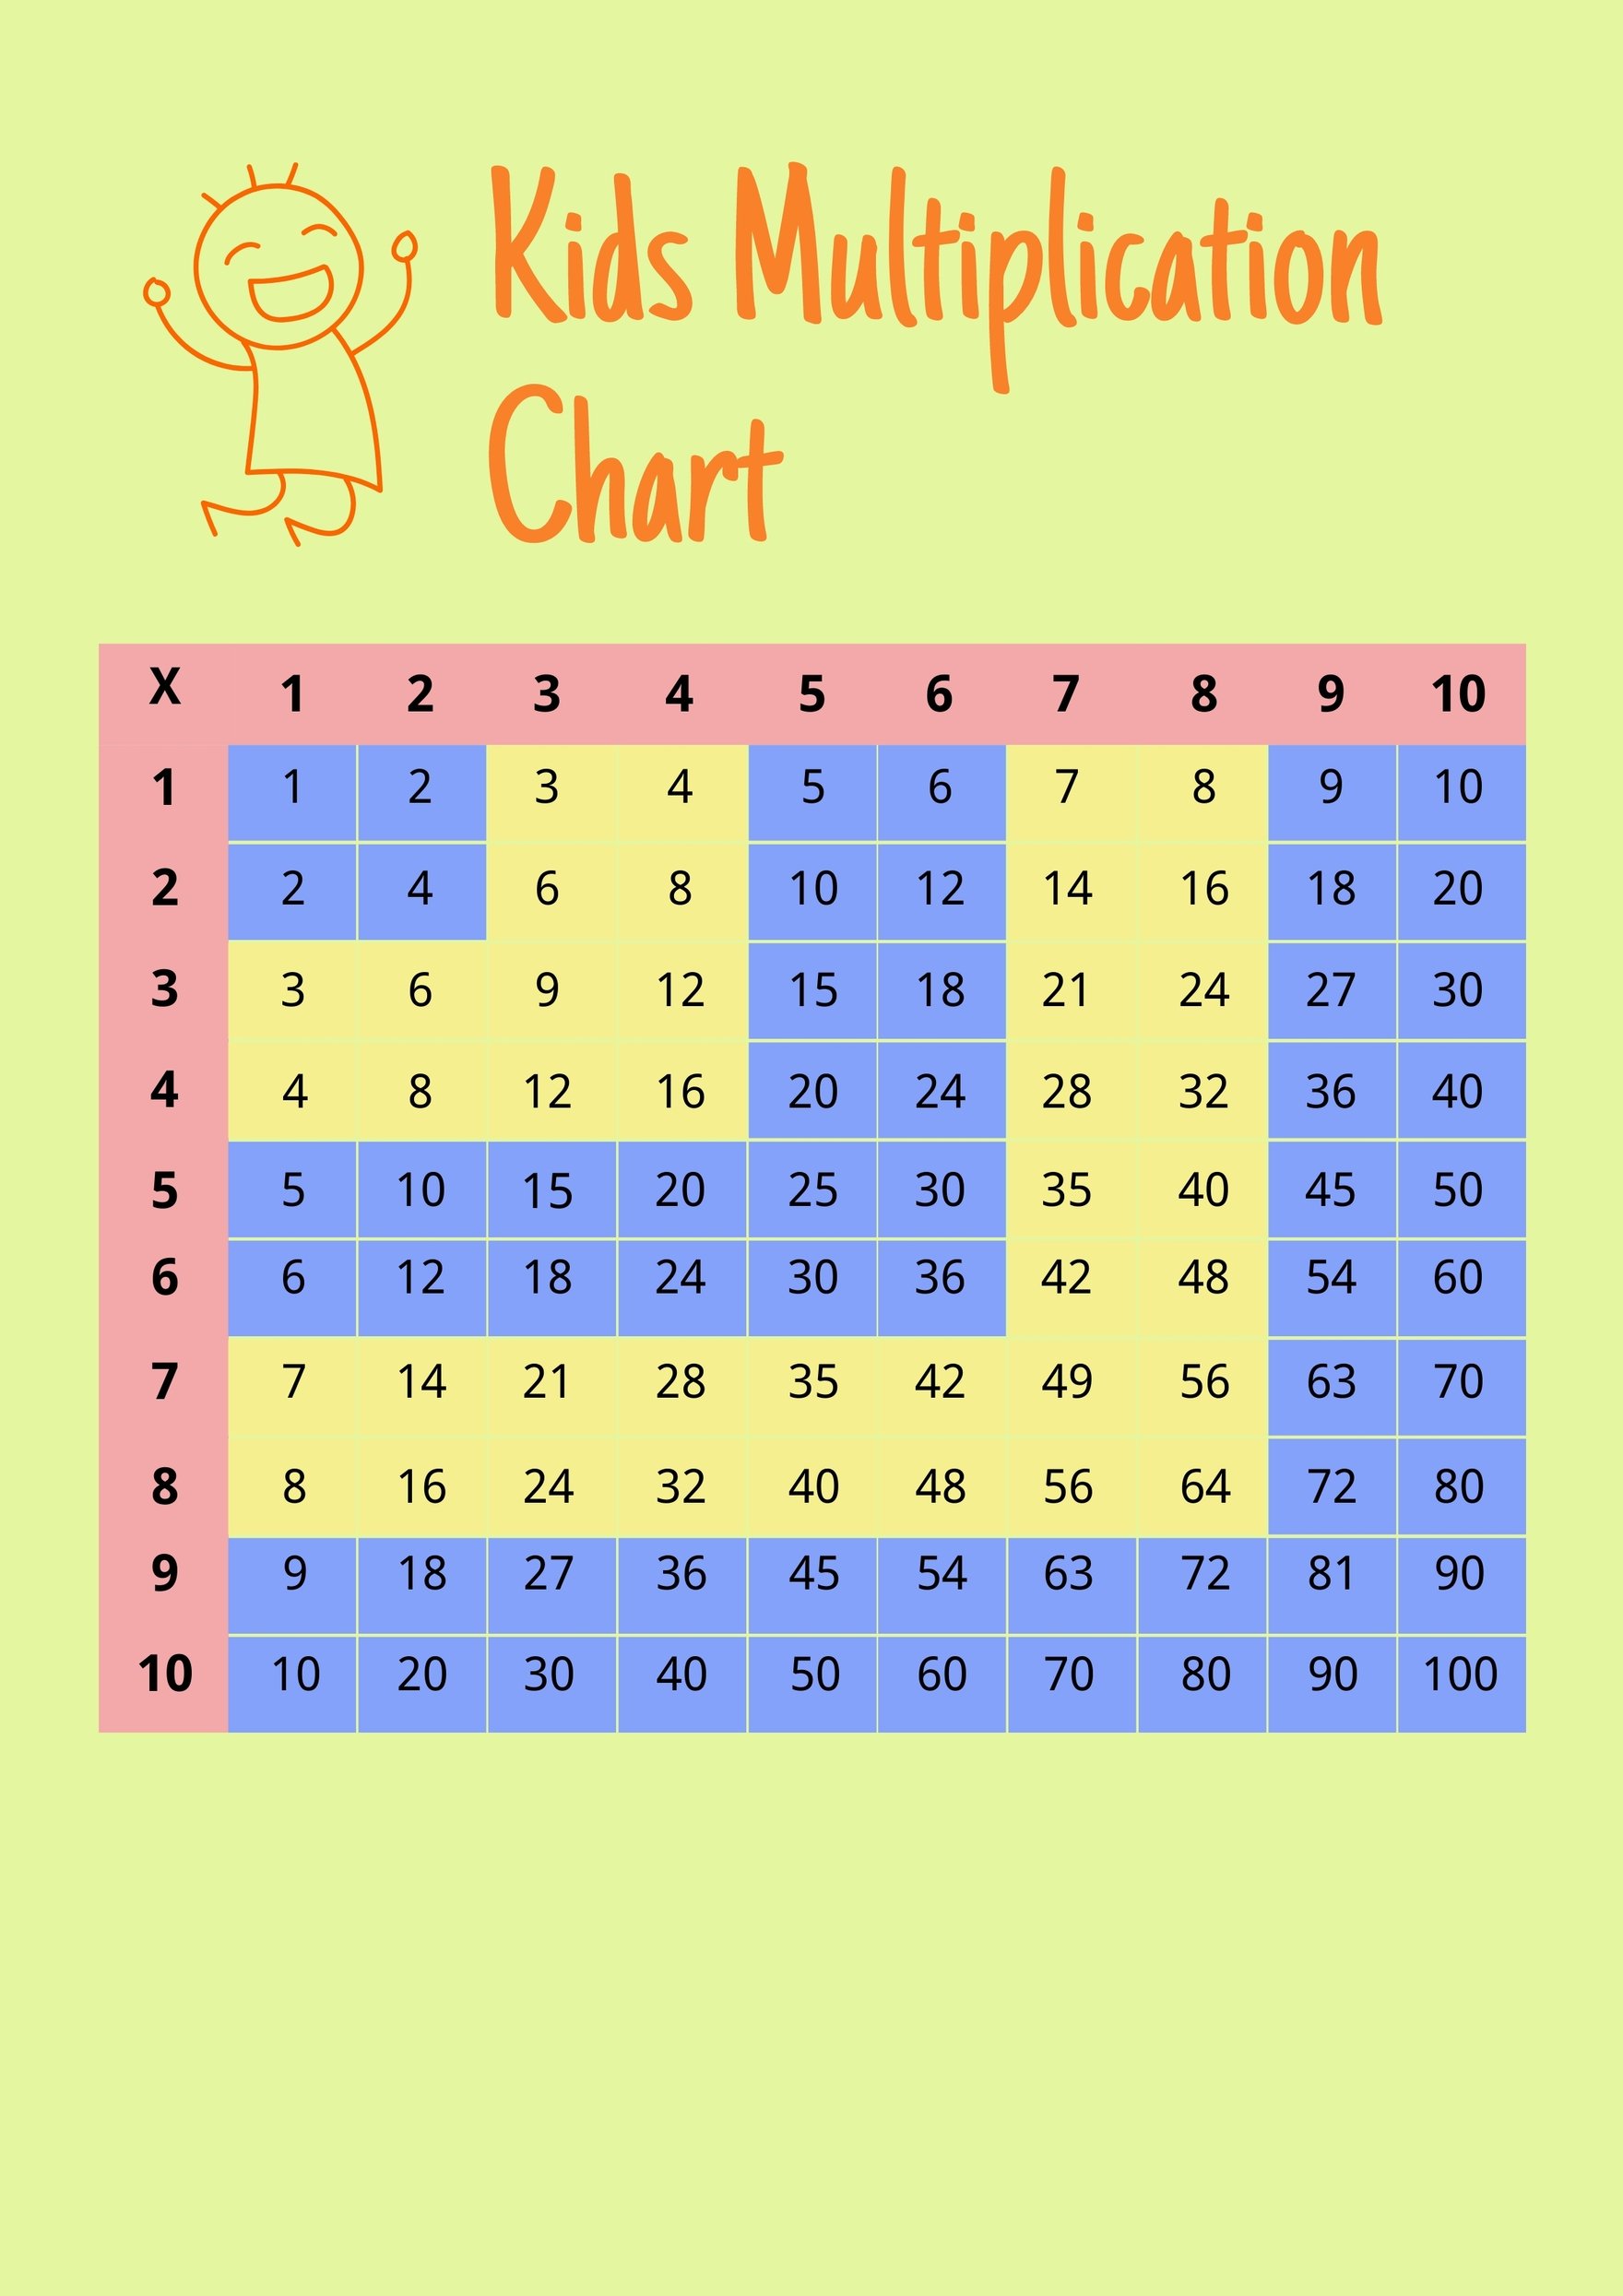 Kids Multiplication Chart Template in PDF, Illustrator